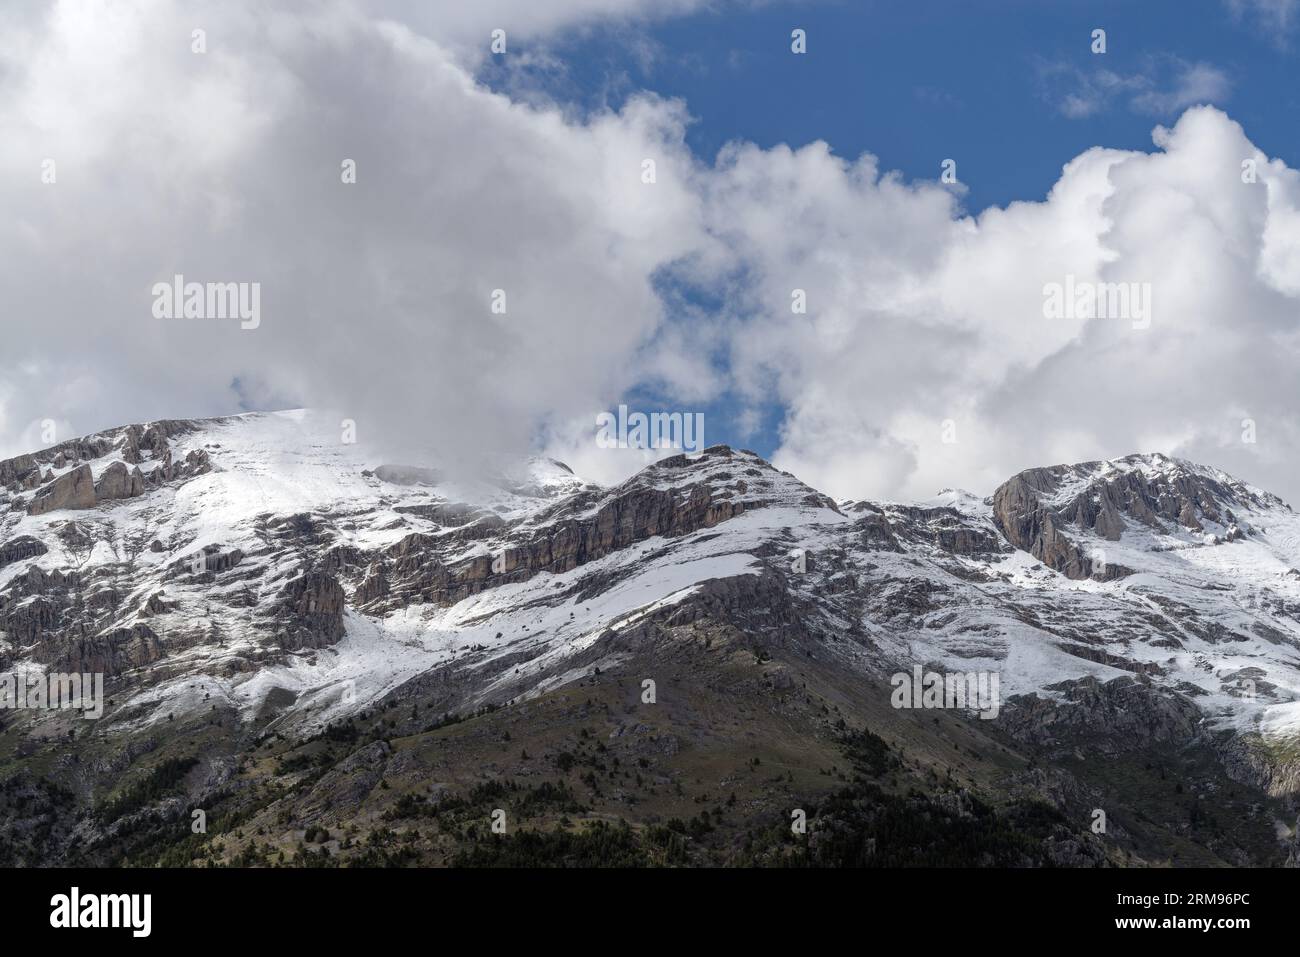 Ligurian Alps mountain range, Piedmont region, Northwestern Italy Stock Photo